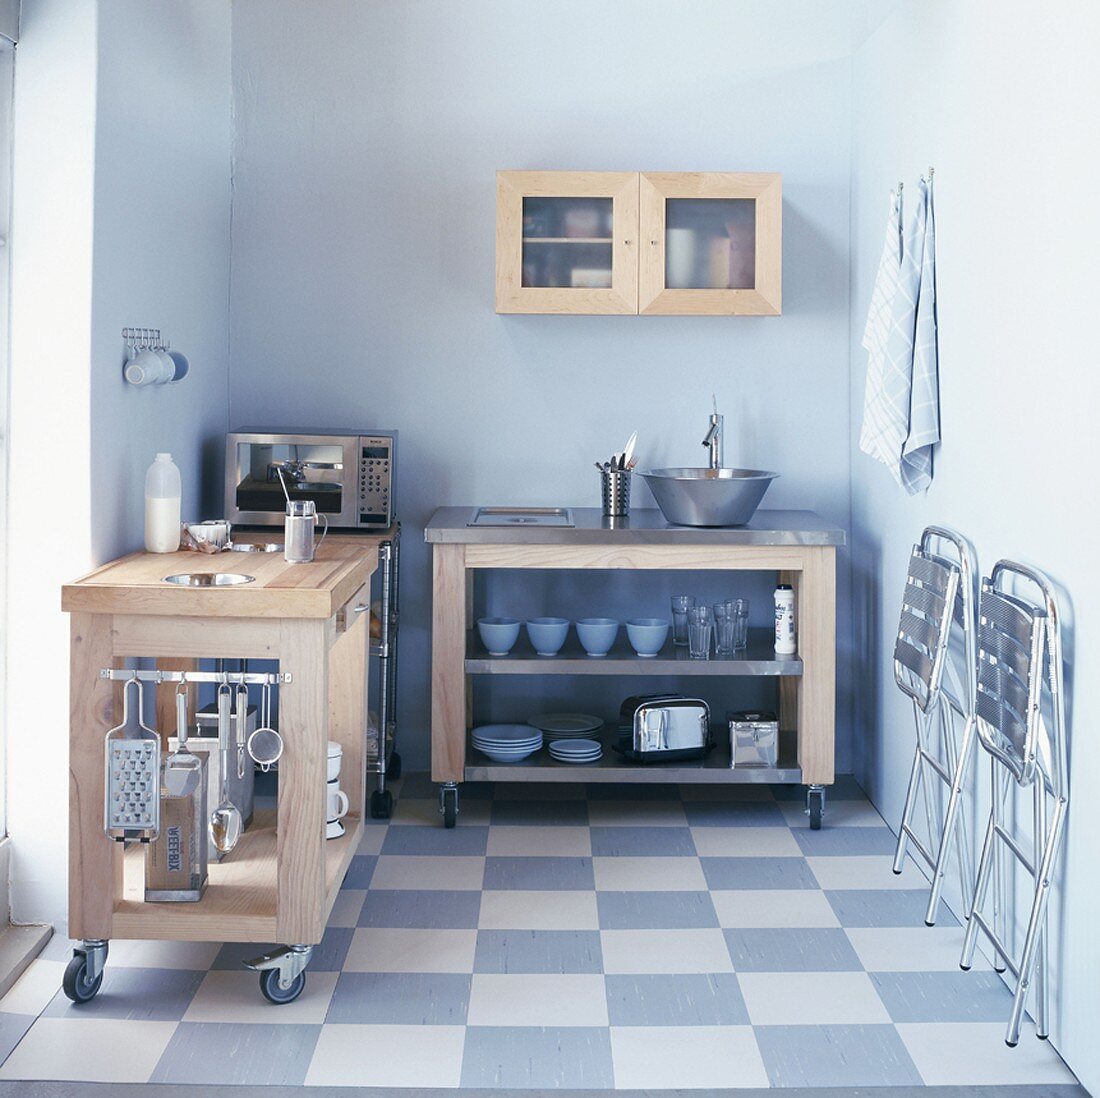 A small kitchen